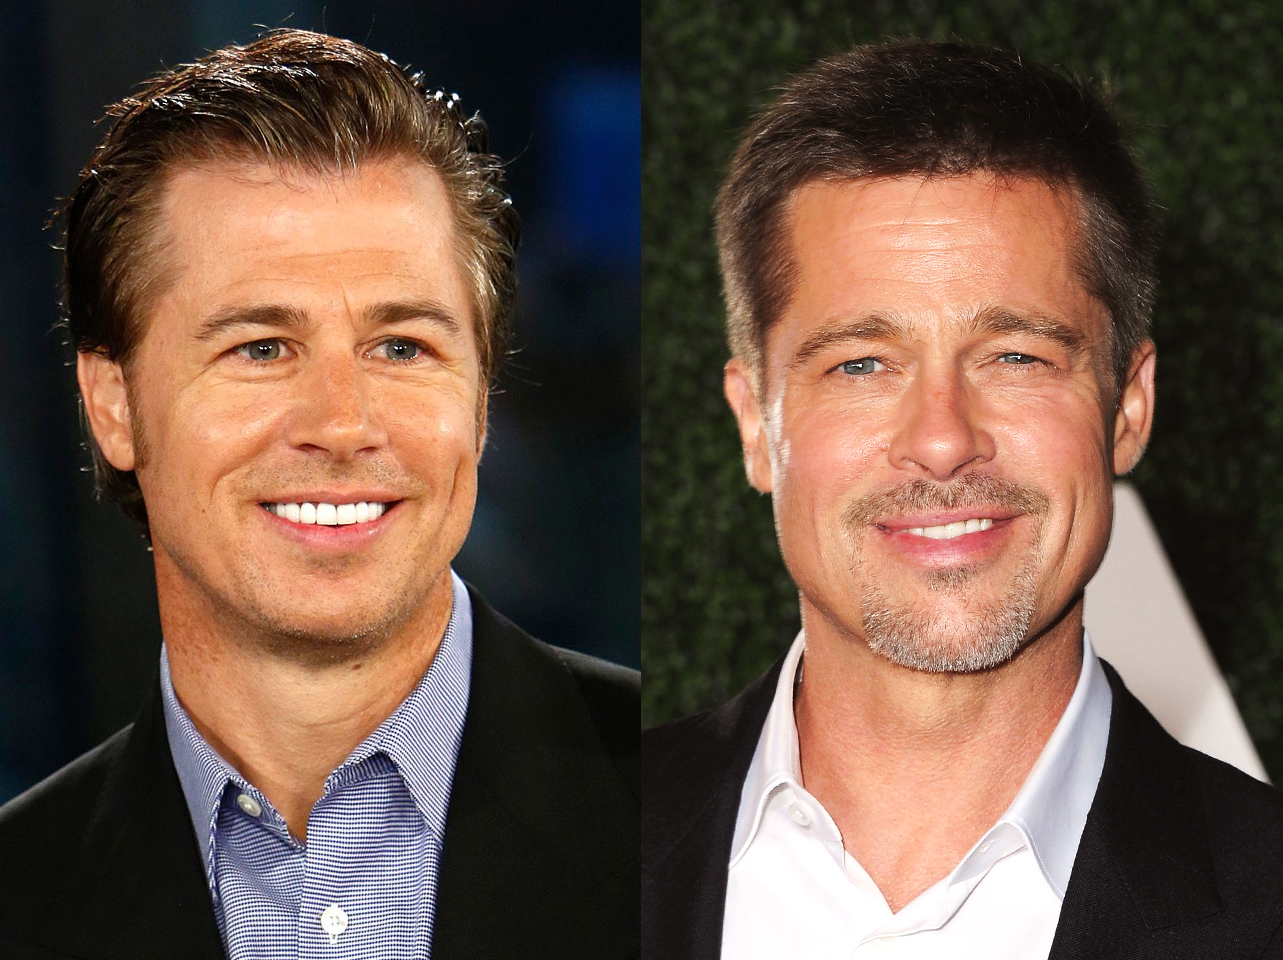 Doug et Brad Pitt | Source : Getty Images